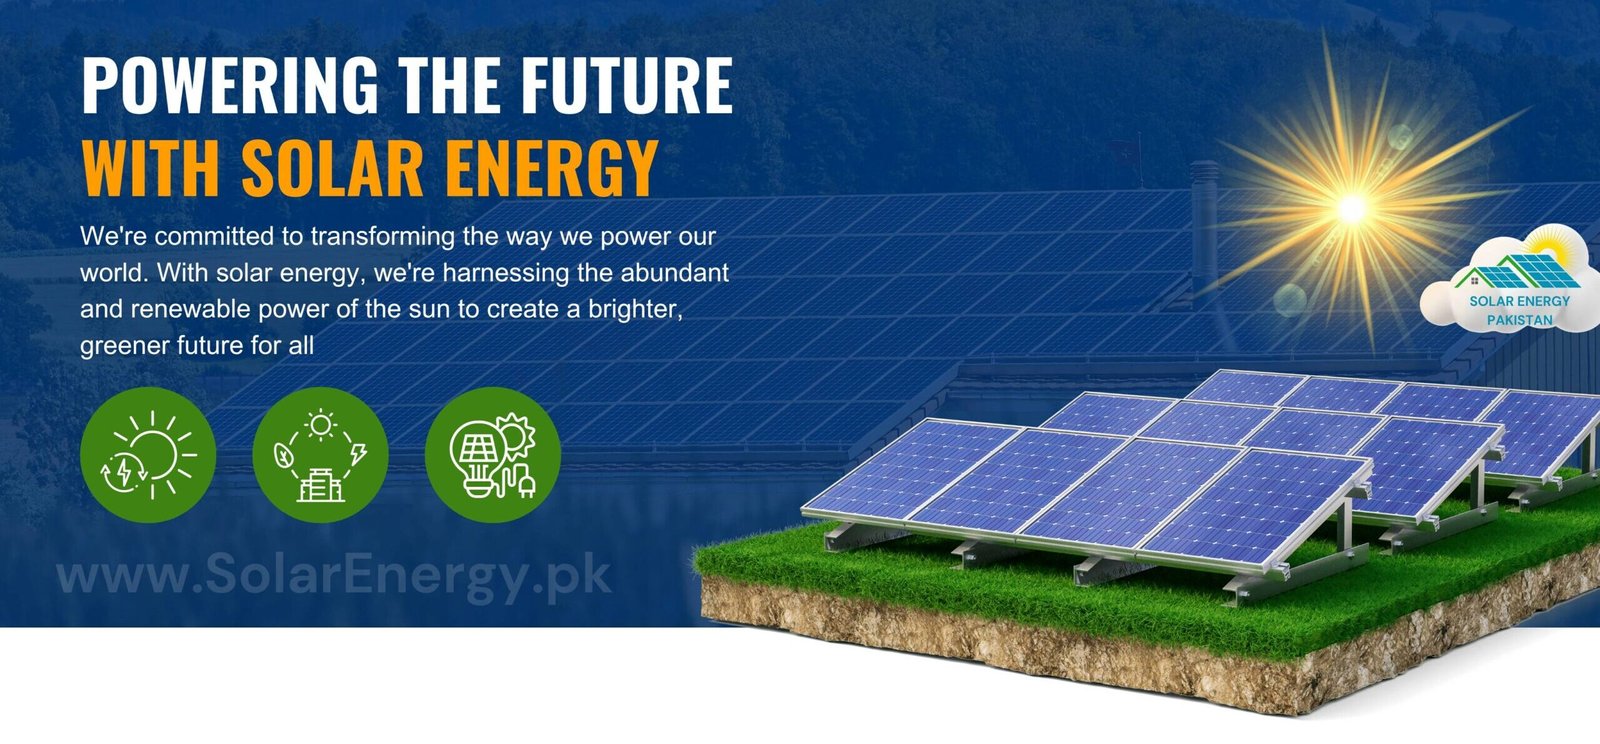 solar energy installer in Pakistan Rawalpindi Islamabad bahria town DHA enclave Askari Chaklala